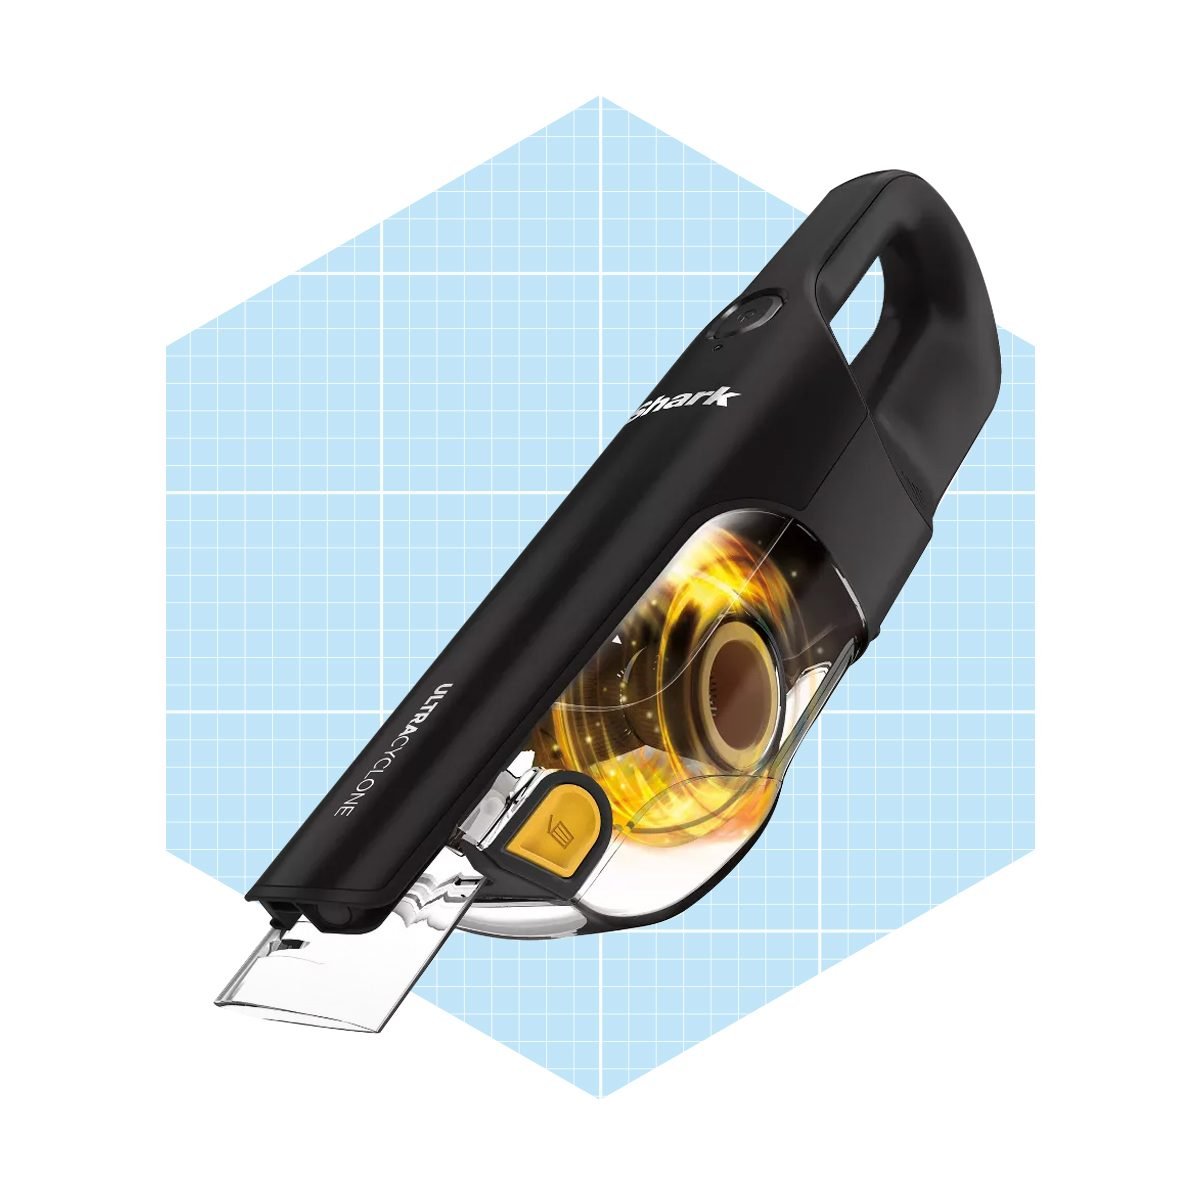 Shark Ultracyclone Pet Pro+ Cordless Handheld Vacuum Ecomm Target.com